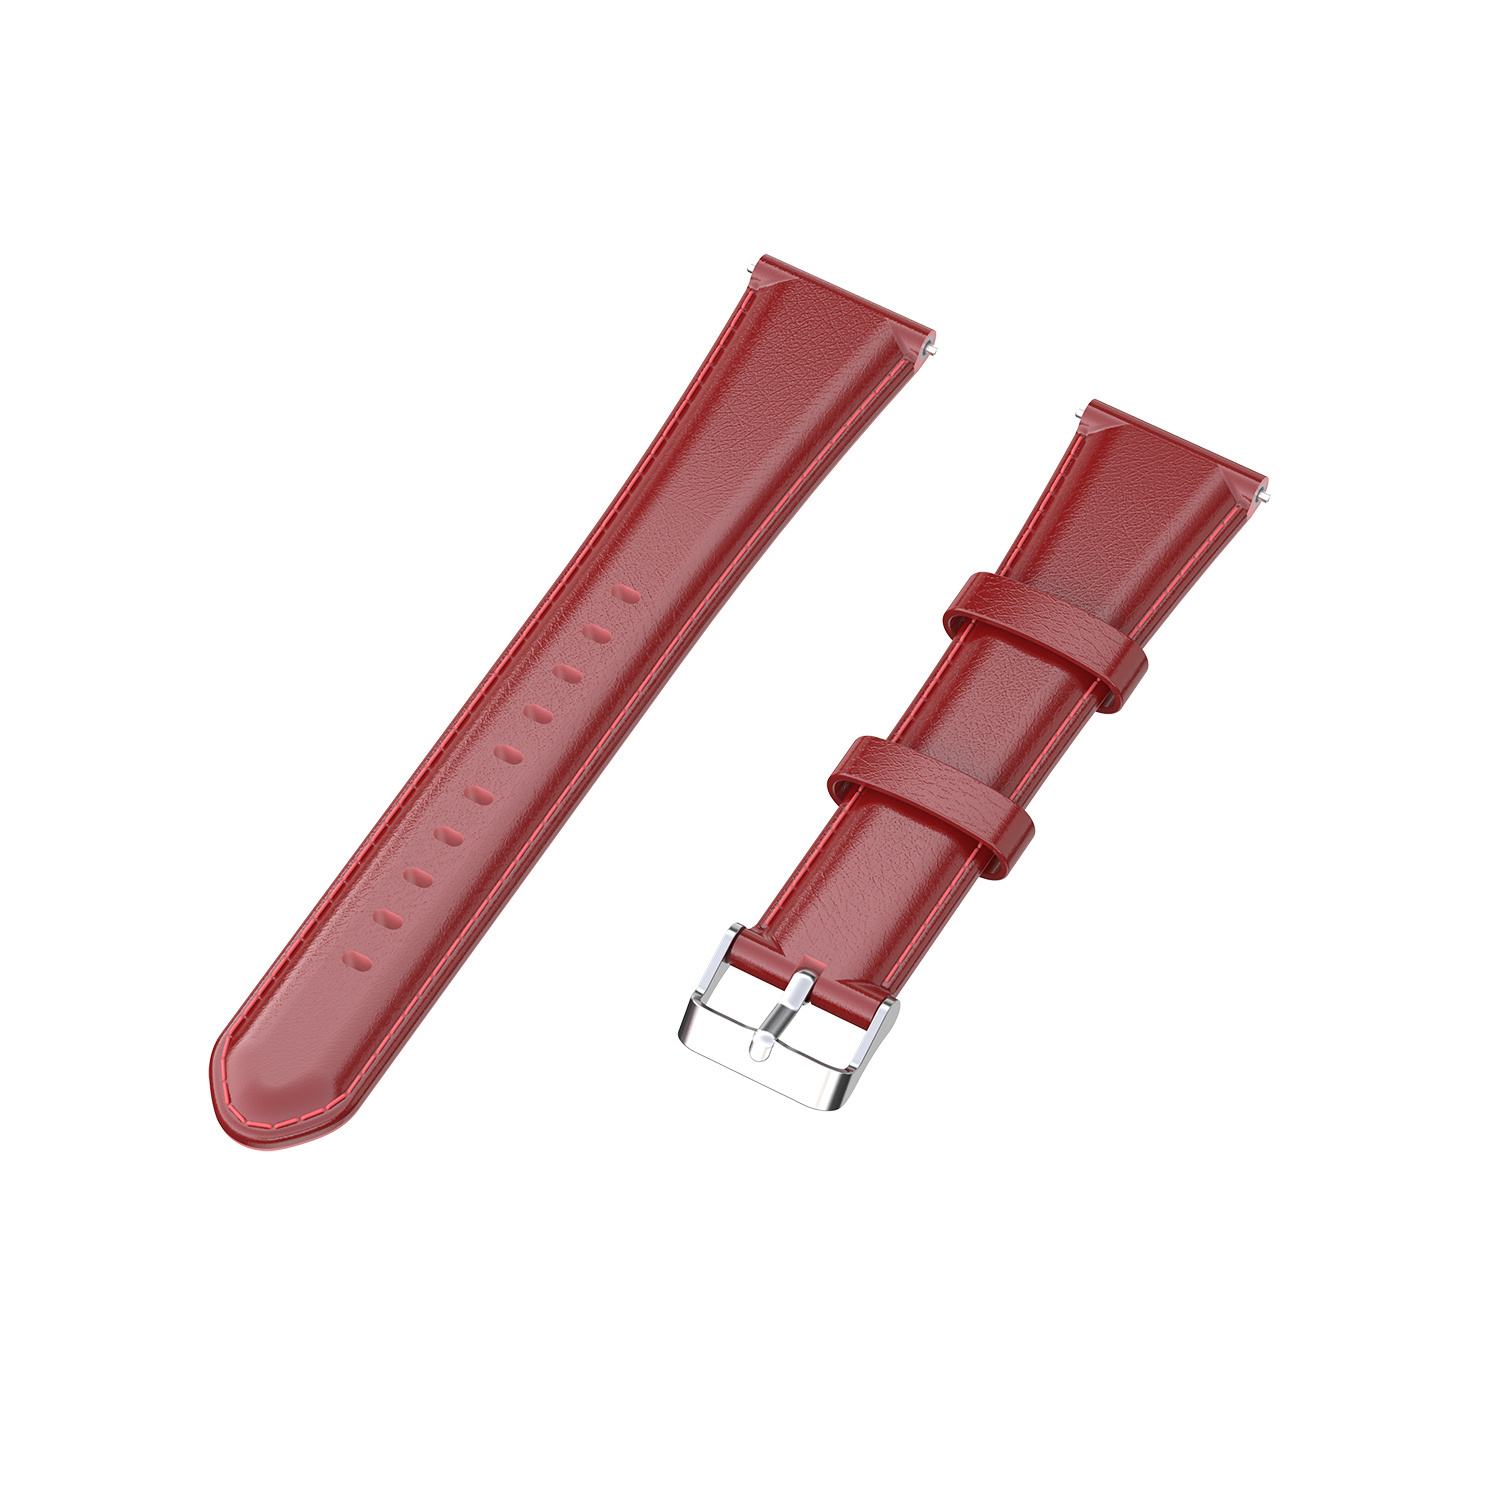 Samsung Galaxy Watch Leather Strap - Red